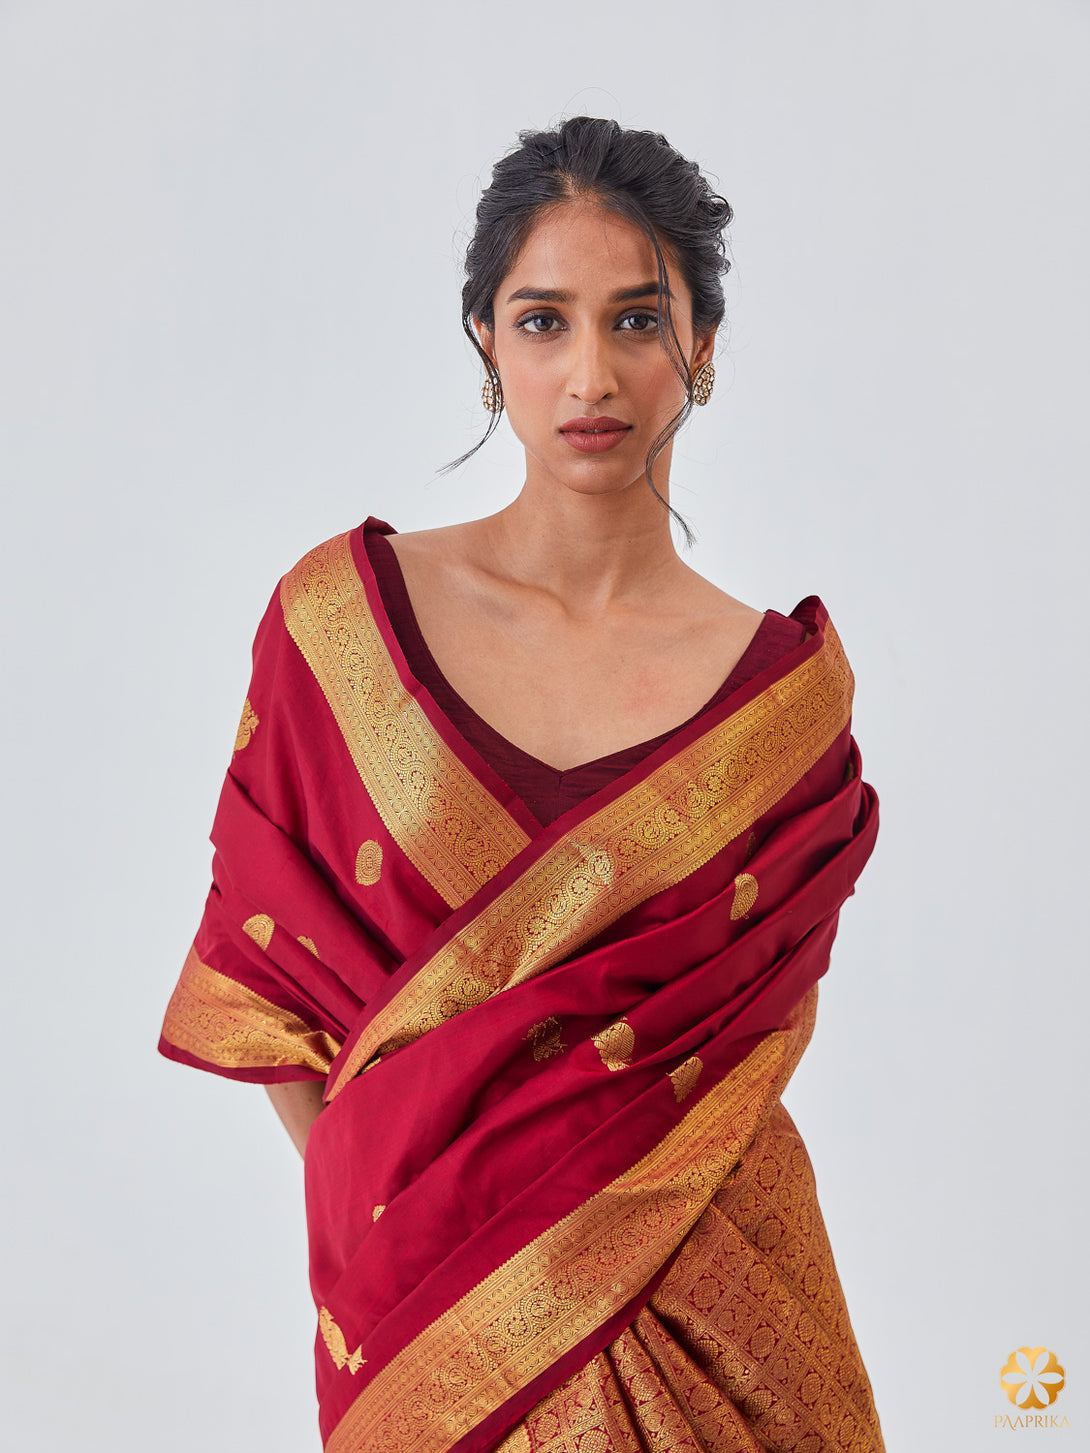 Beautiful Drape of Exquisite Handwoven Kanjivaram Saree - Opulence and Grace.